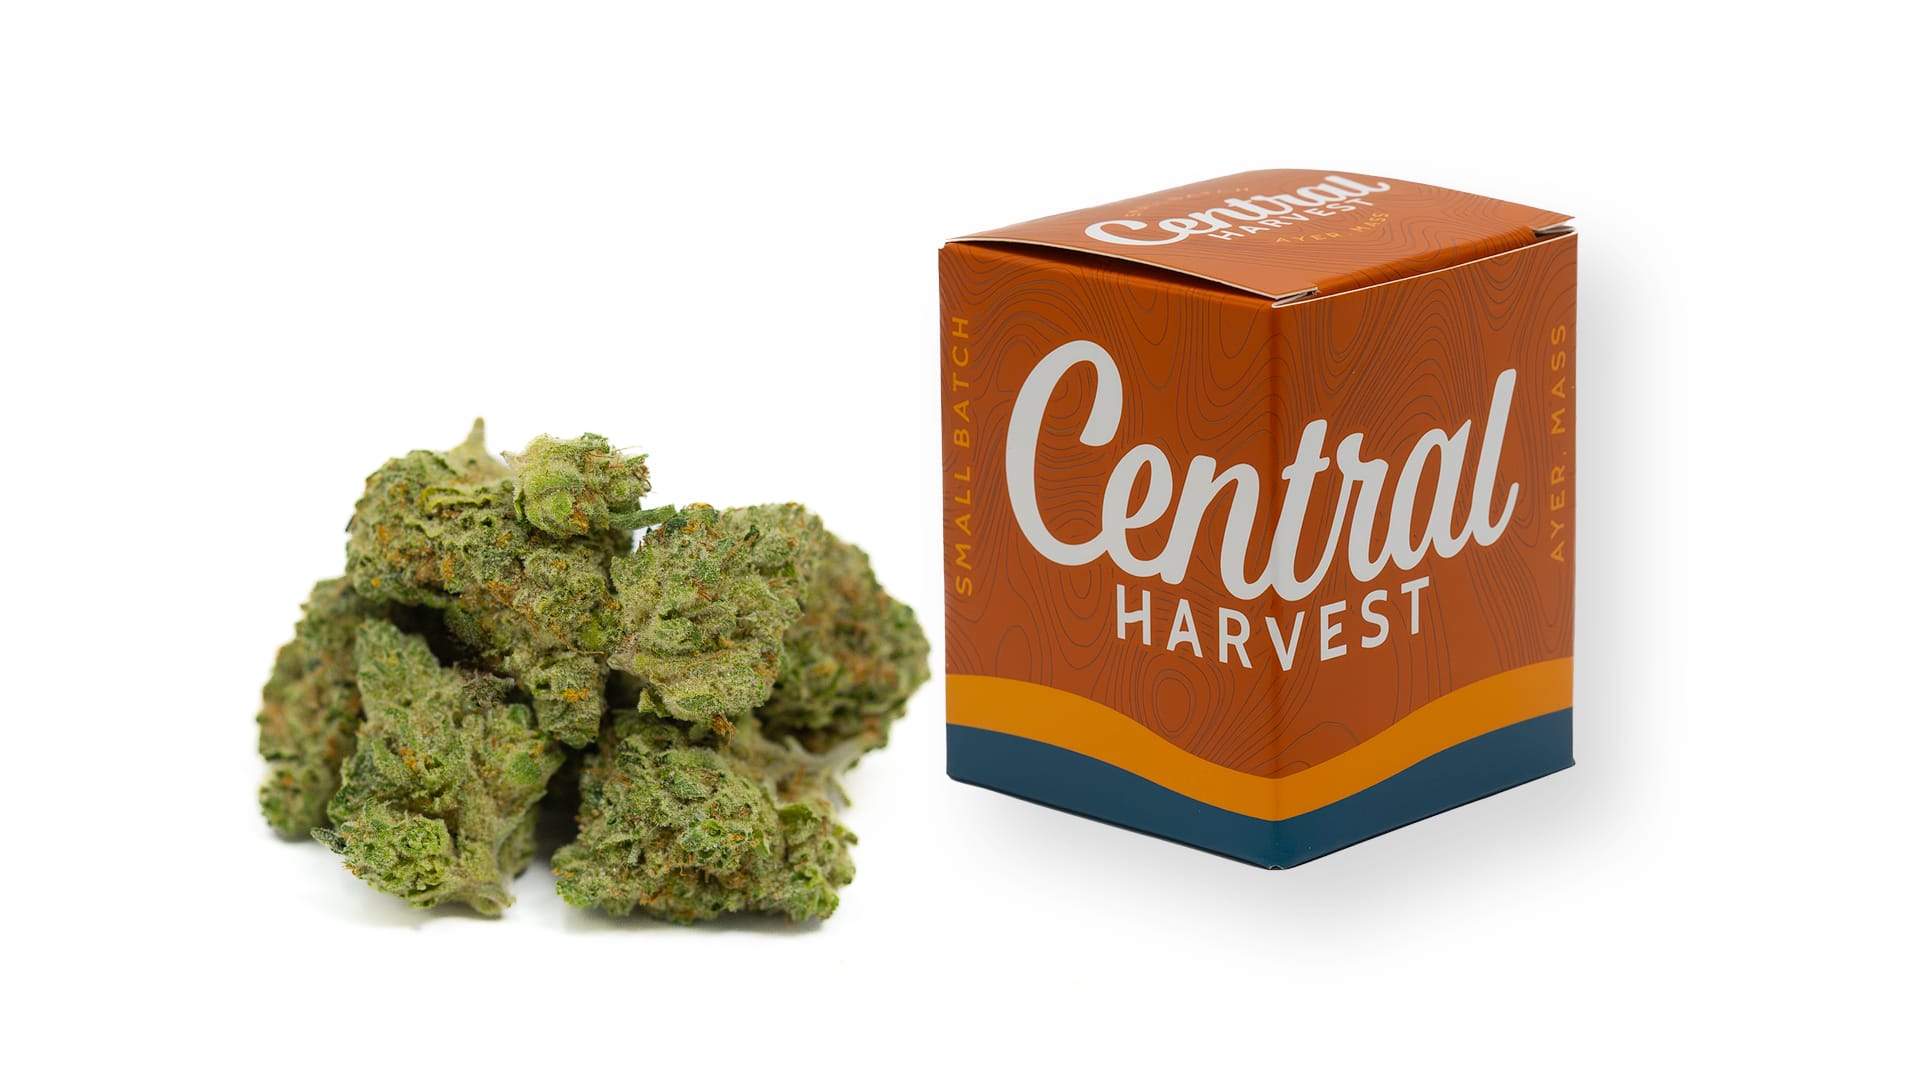 SIS-DMV is an Indica Cannabis Strain grown at Central Harvest